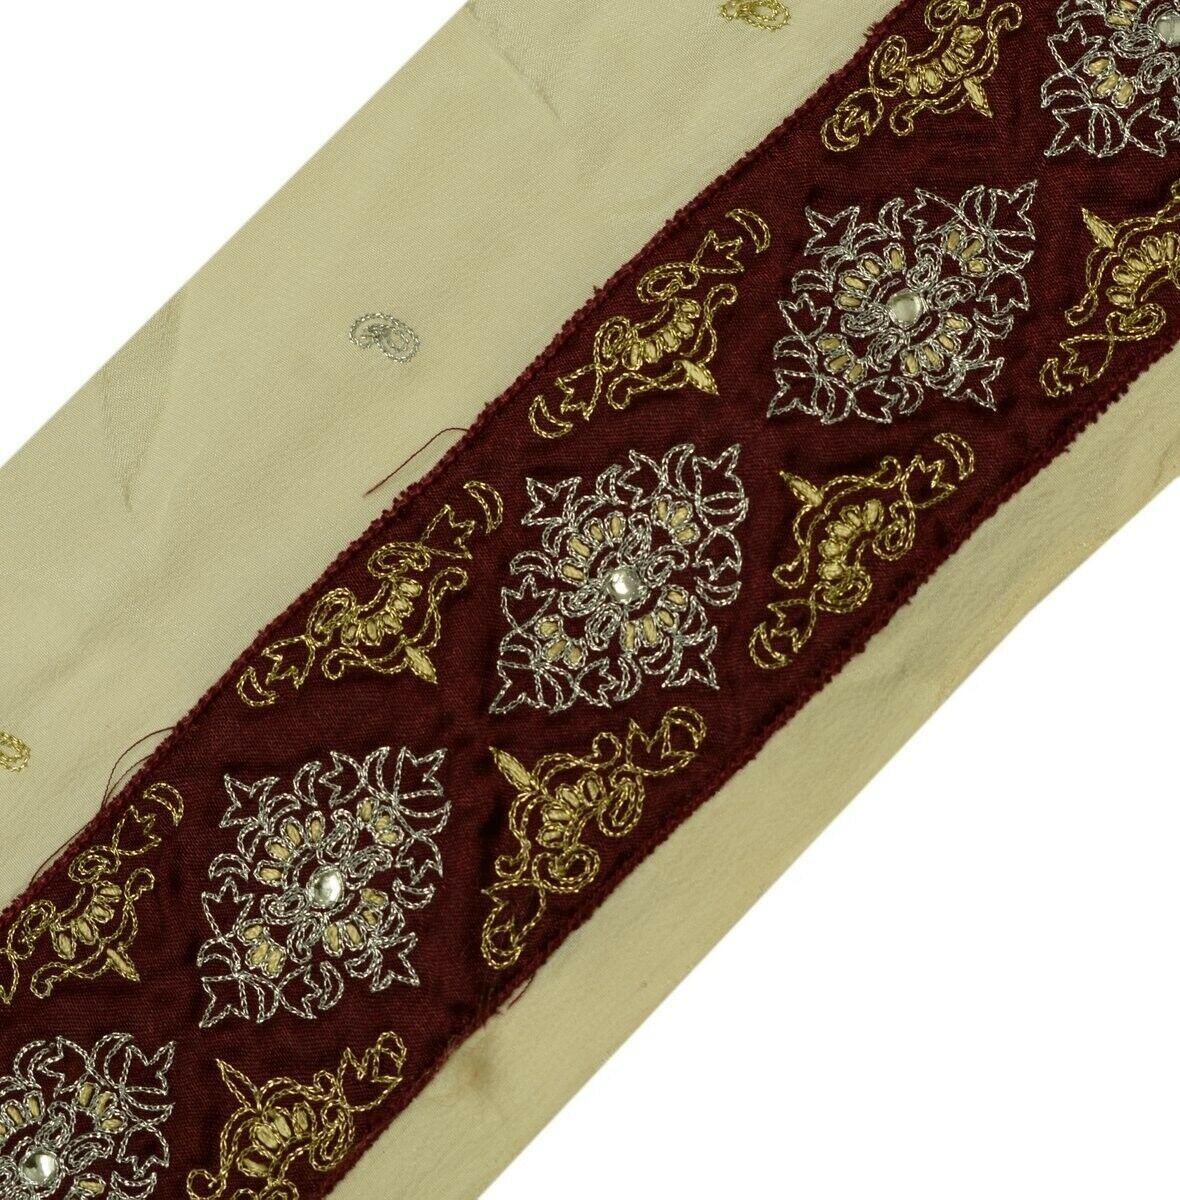 Vintage Sari Border Indian Craft Trim Hand Embroidered Beaded Garnet Ribbon Lace